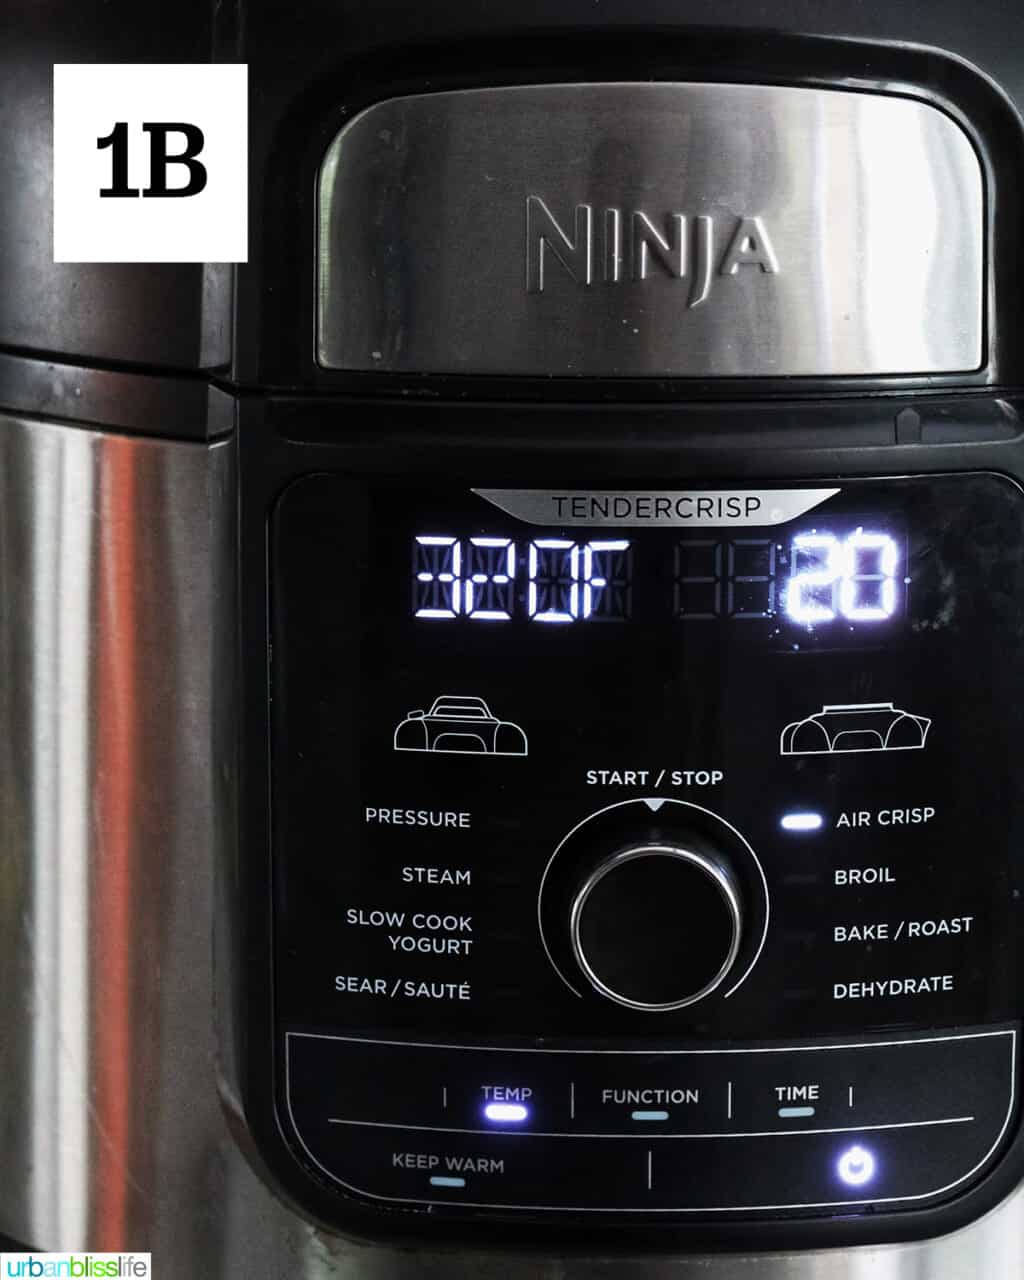 Ninja foodi air fryer set to air fry at 320 degrees for 20 minutes.